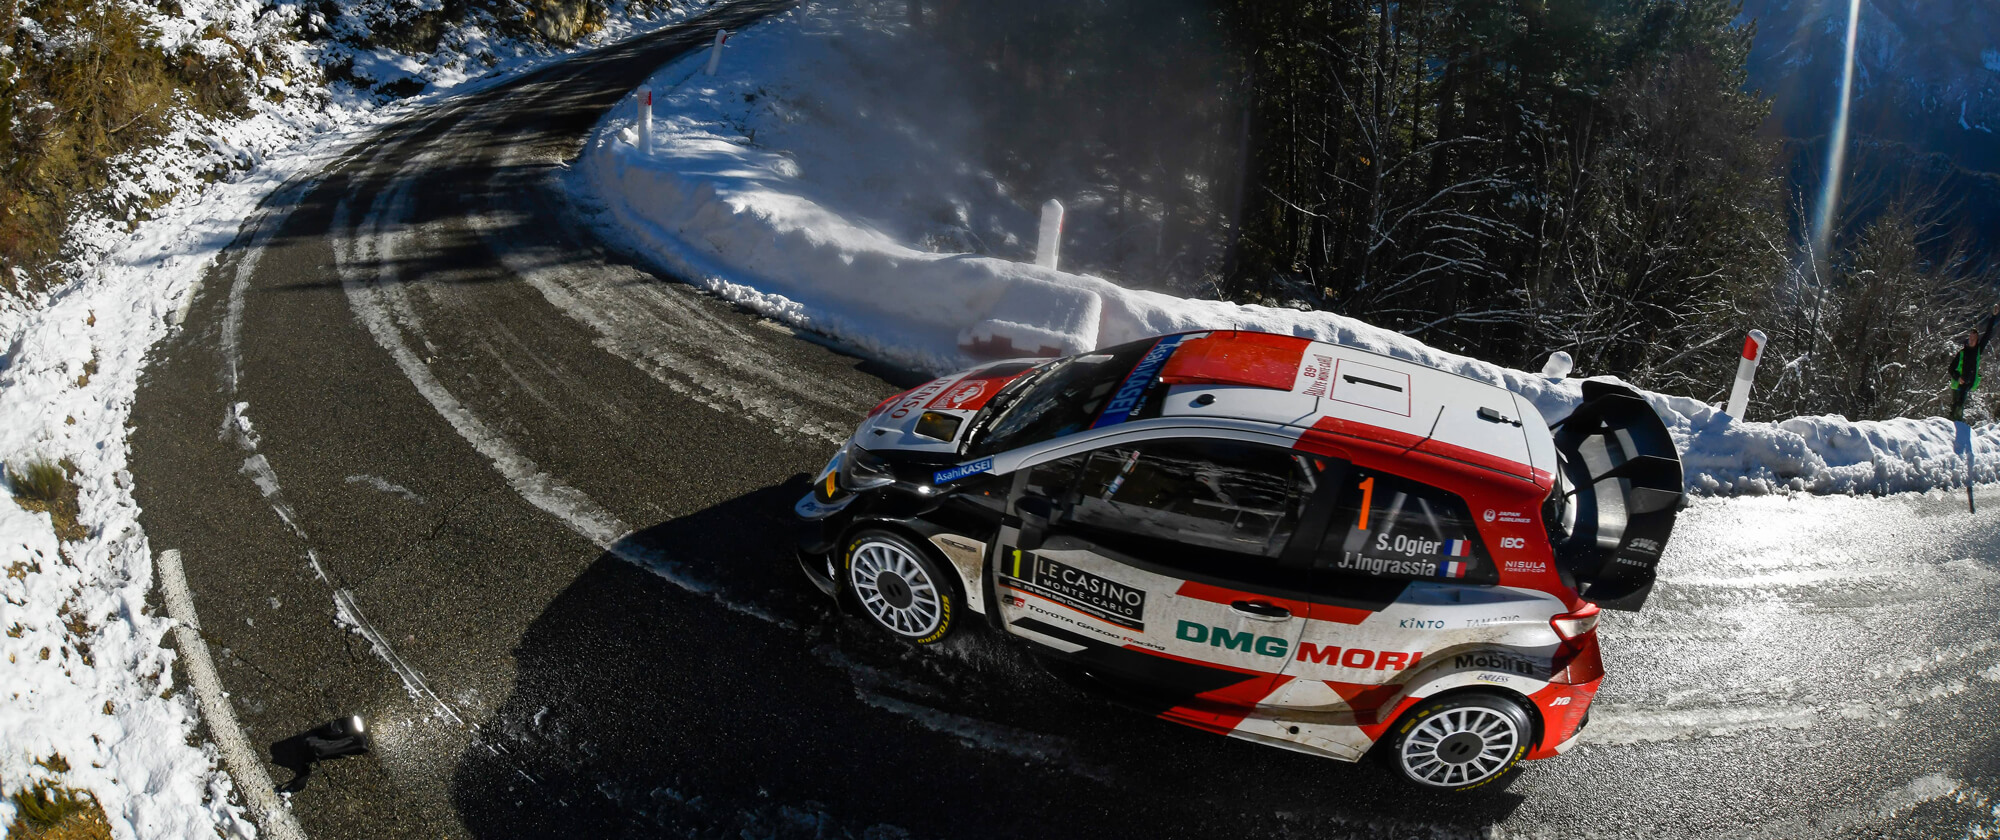 WRC - Sébastien Ogier - Pilote officiel Toyota GAZOO Racing en WRC